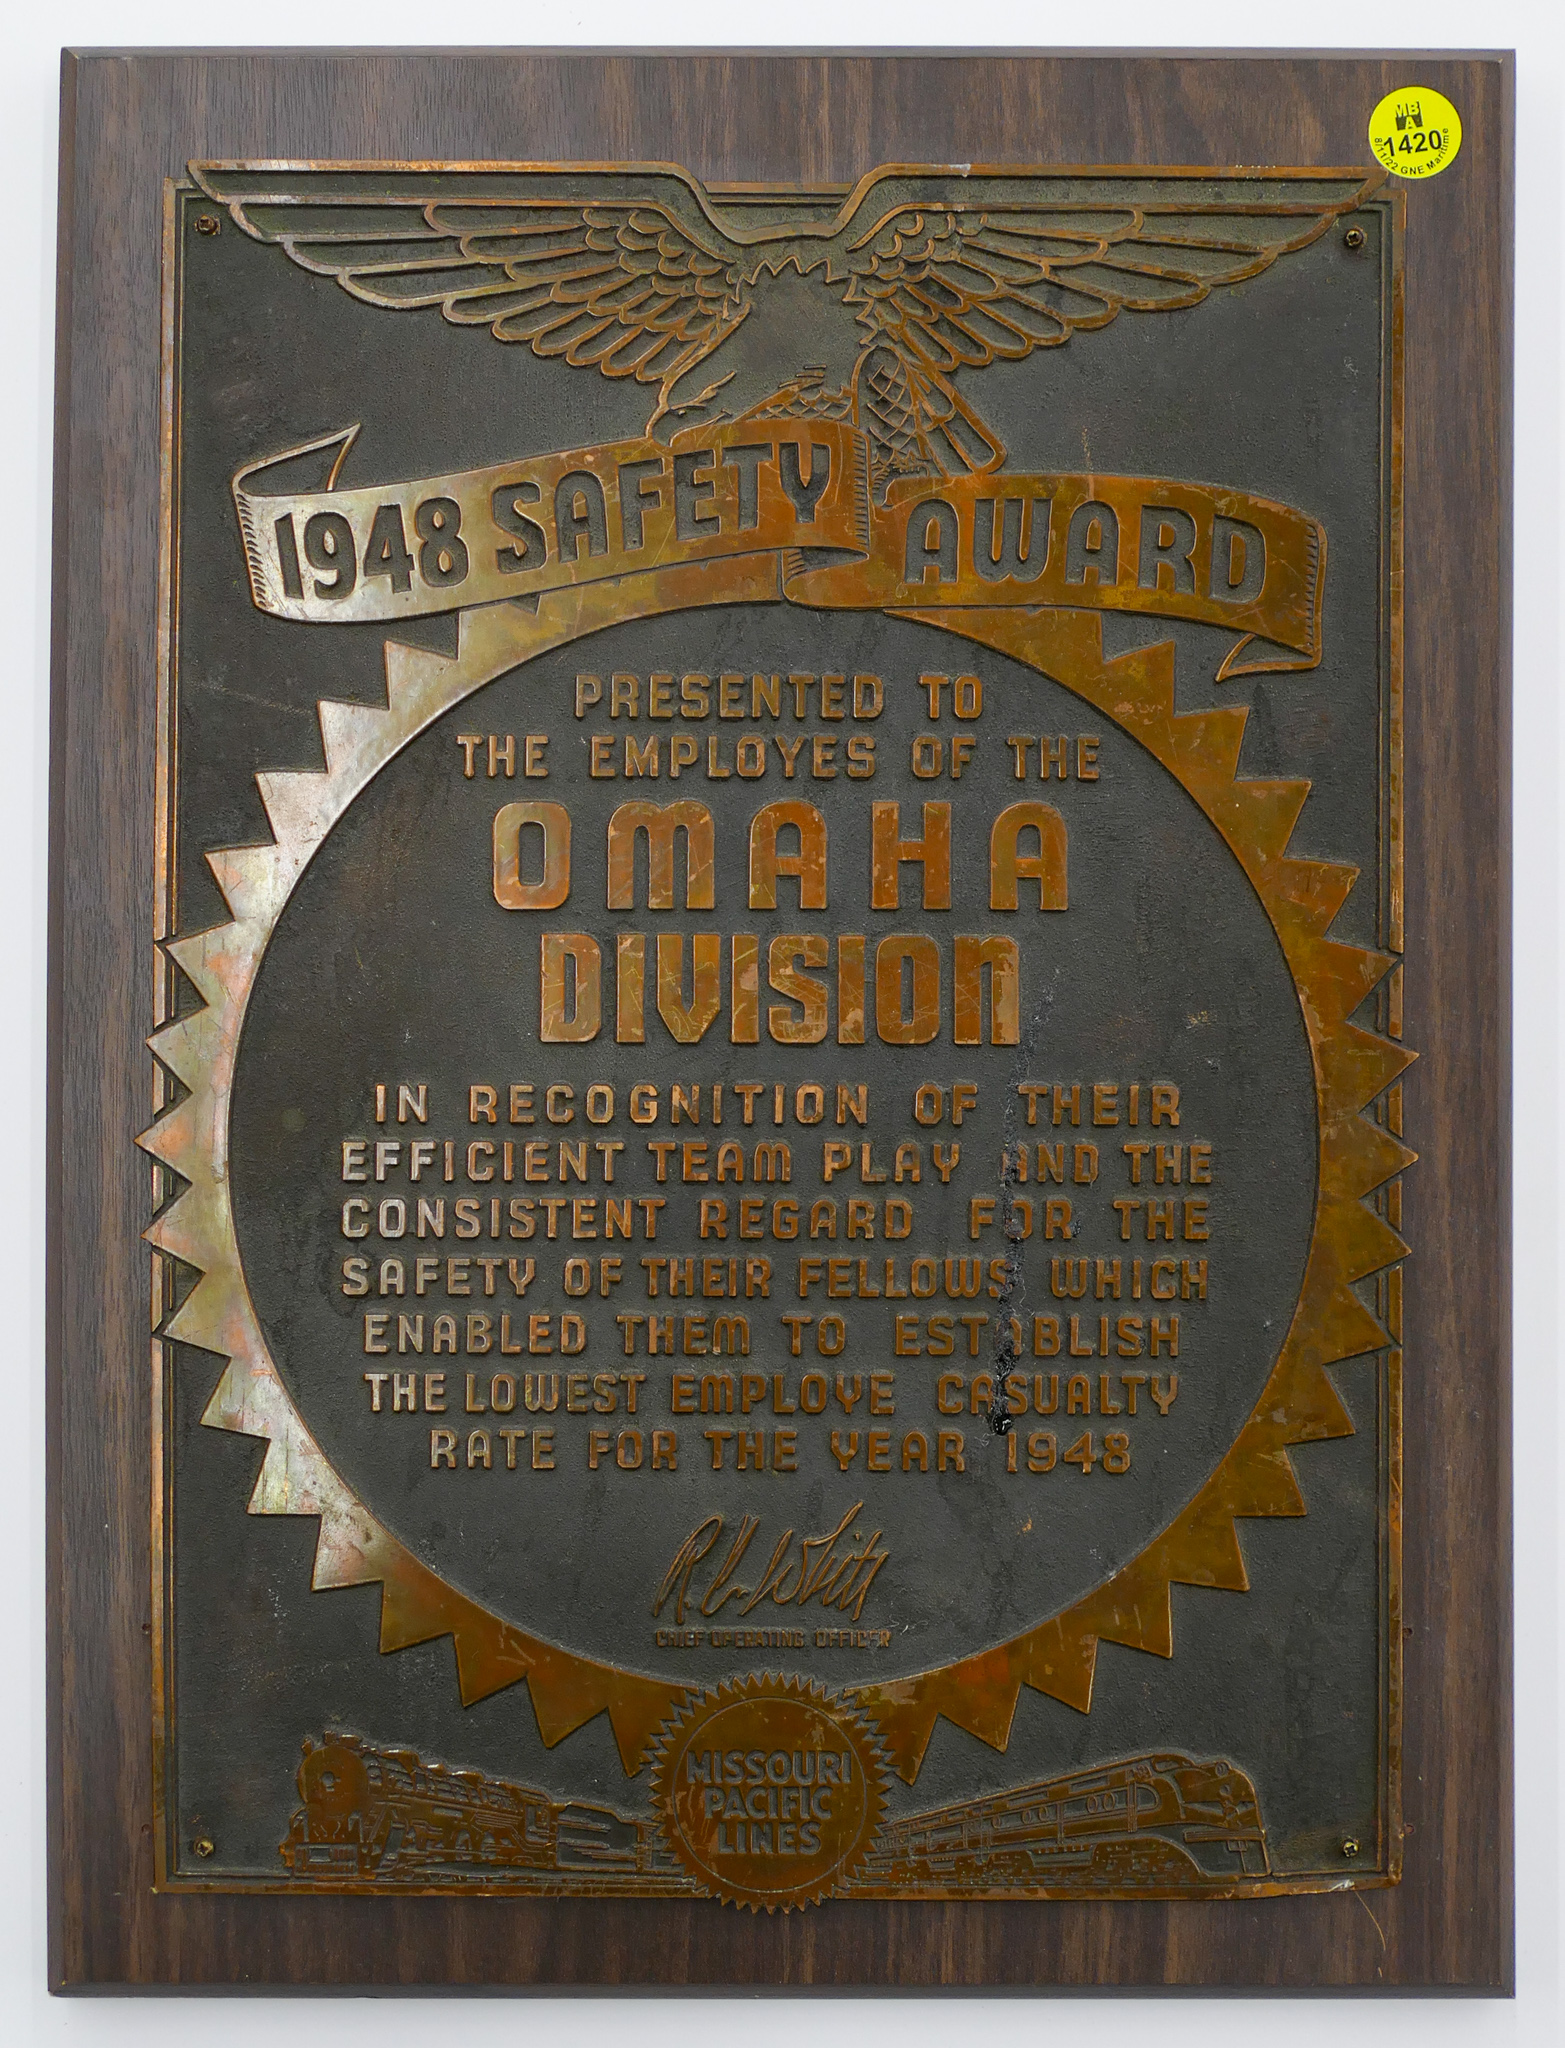 1948 Missouri Pacific Railway Bronze